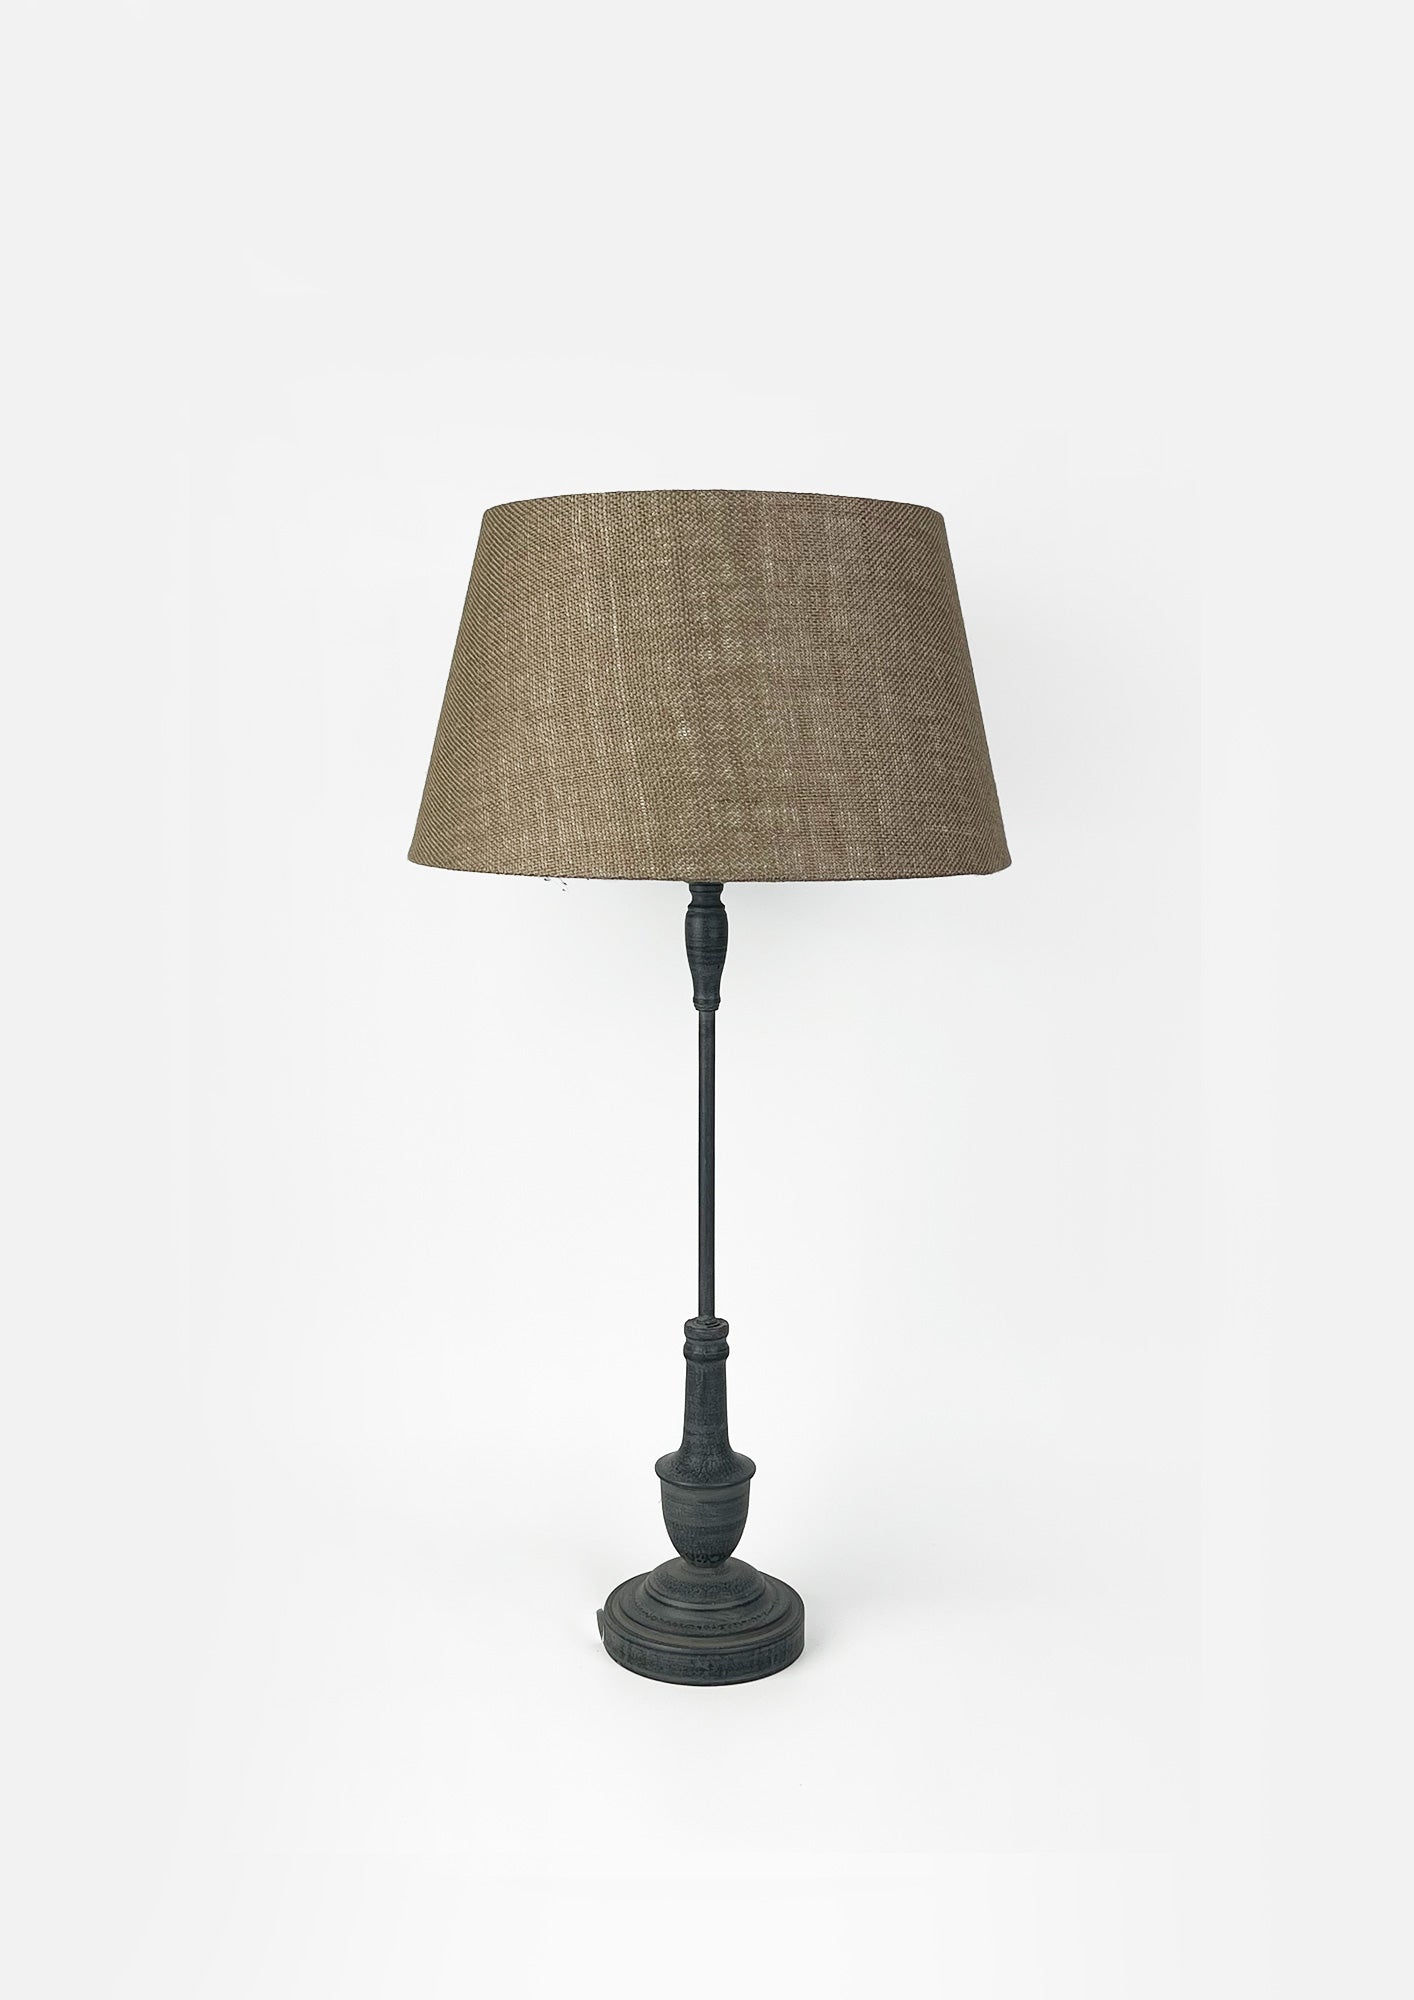 Parisian Style Table Lamp